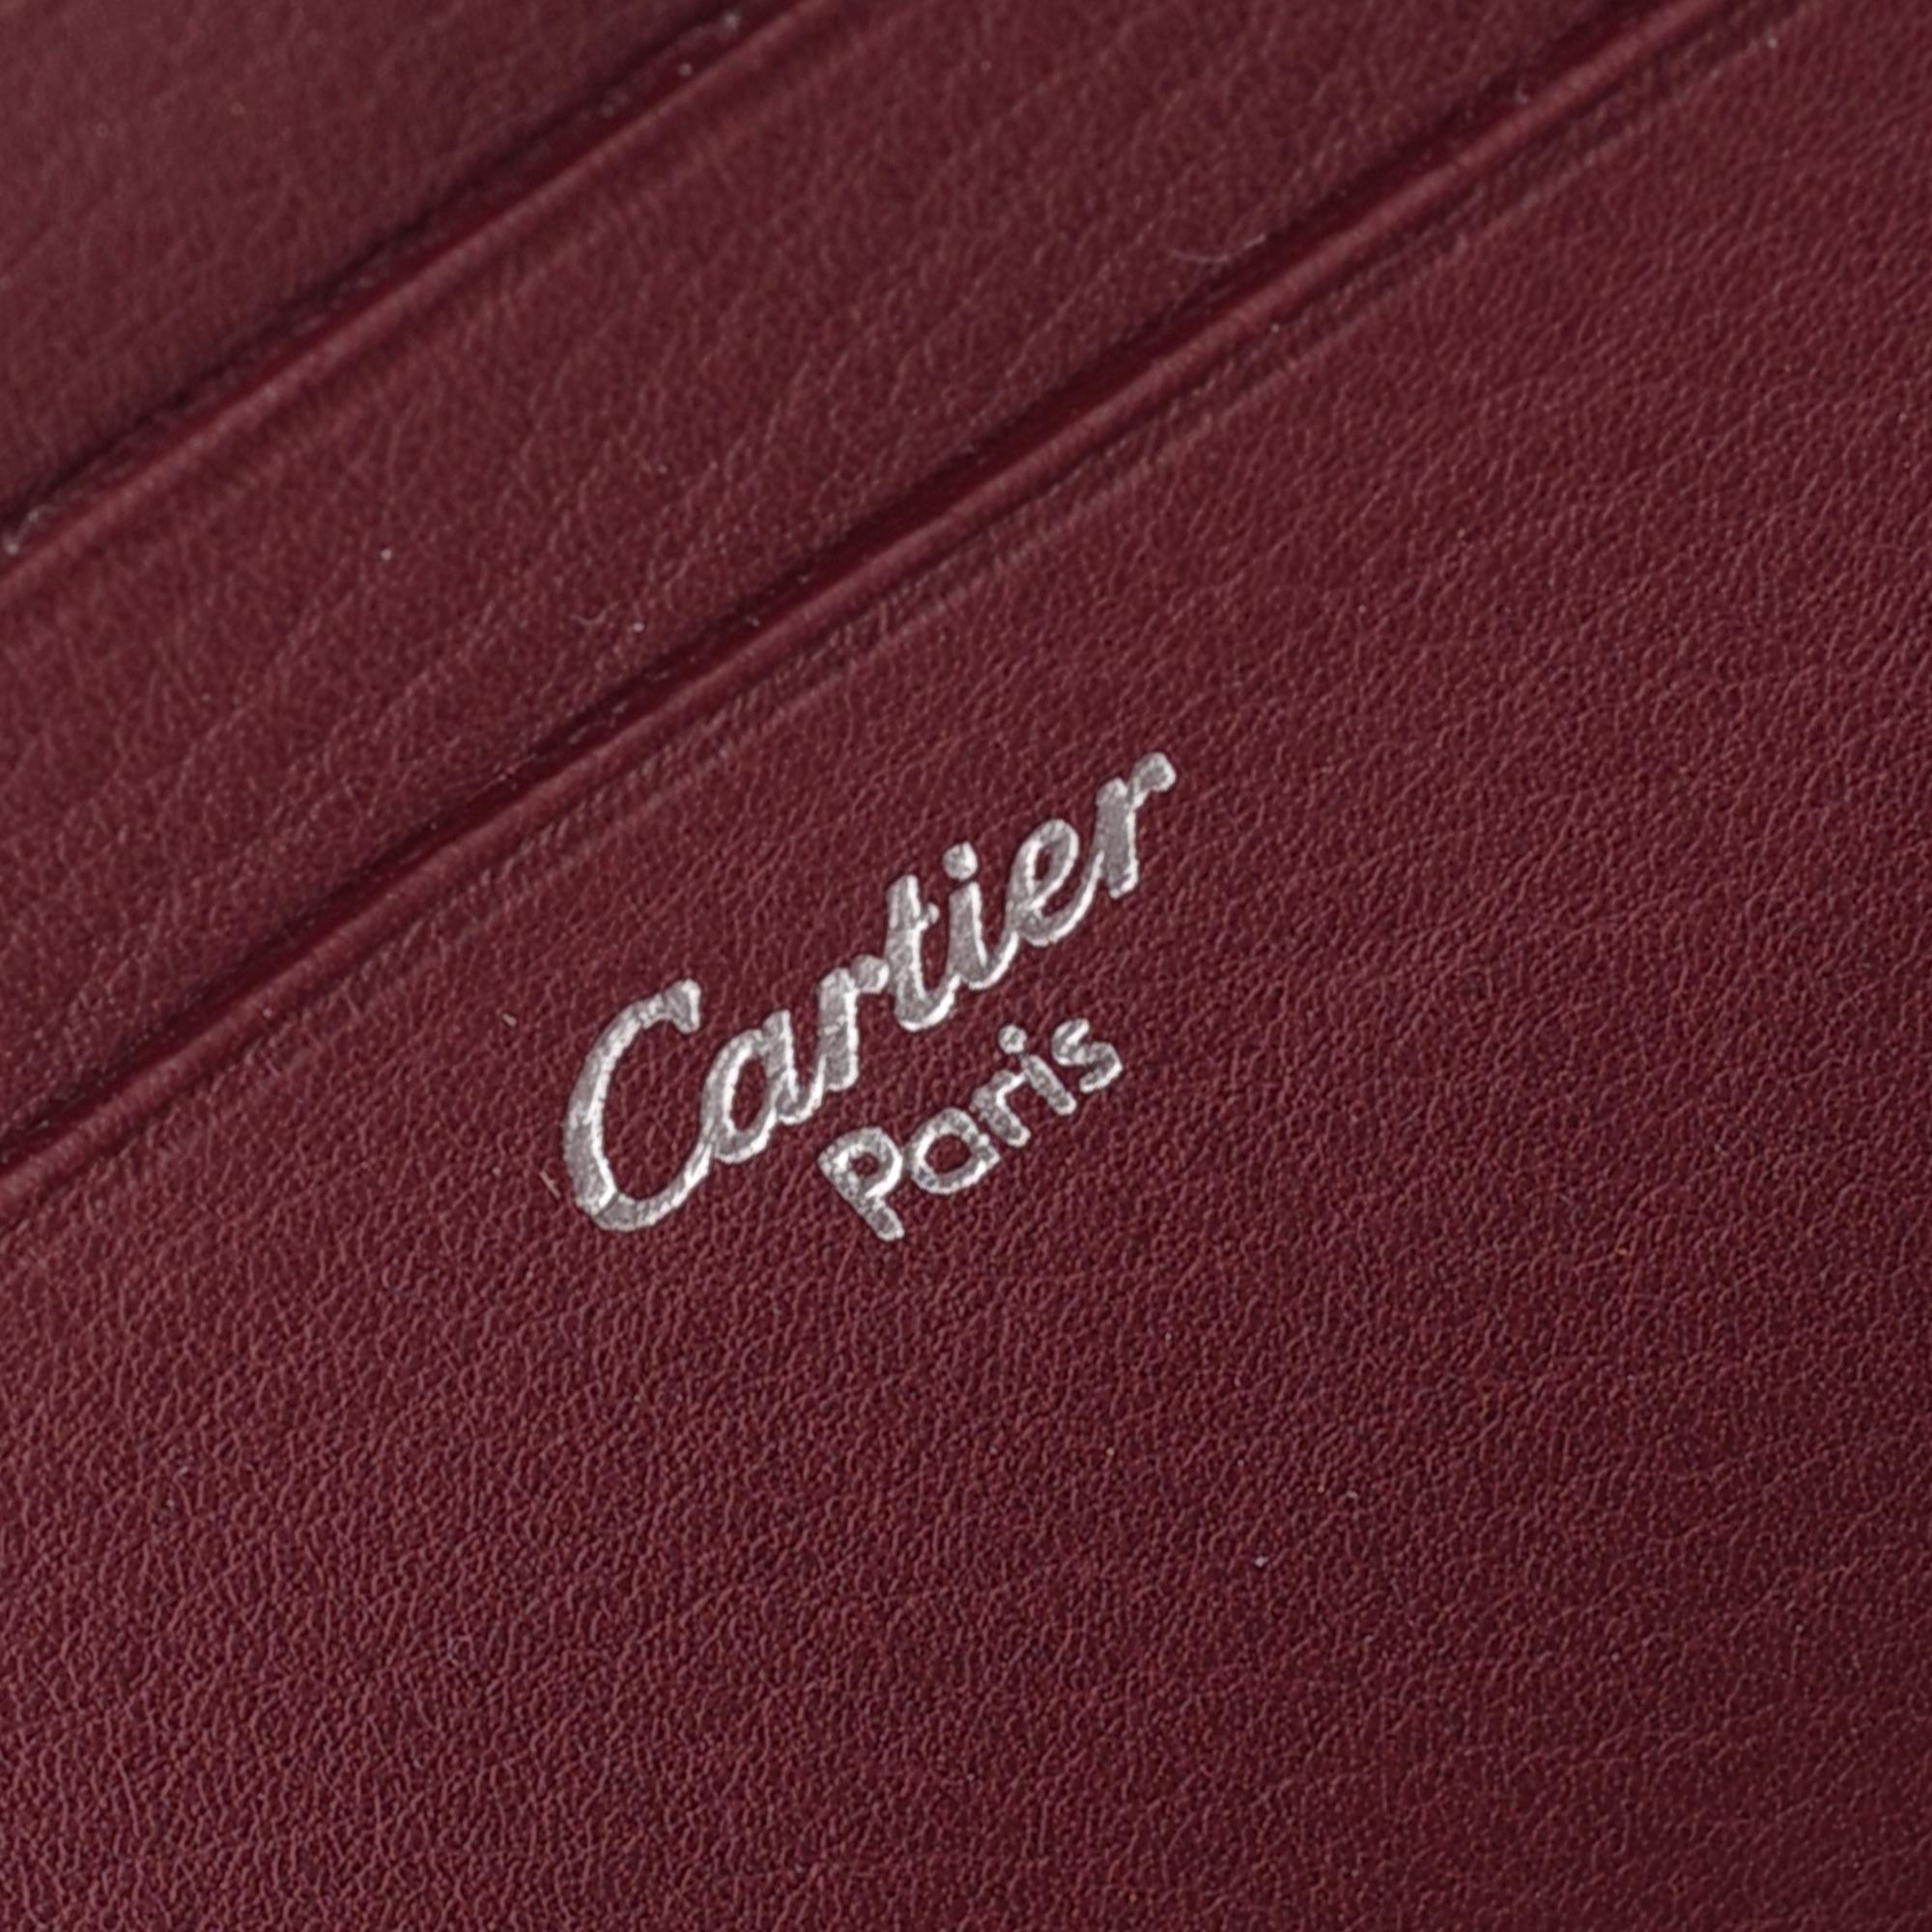 Black Stunning Cartier Wallet in burgundy crocodile porosus leather, silver hardware